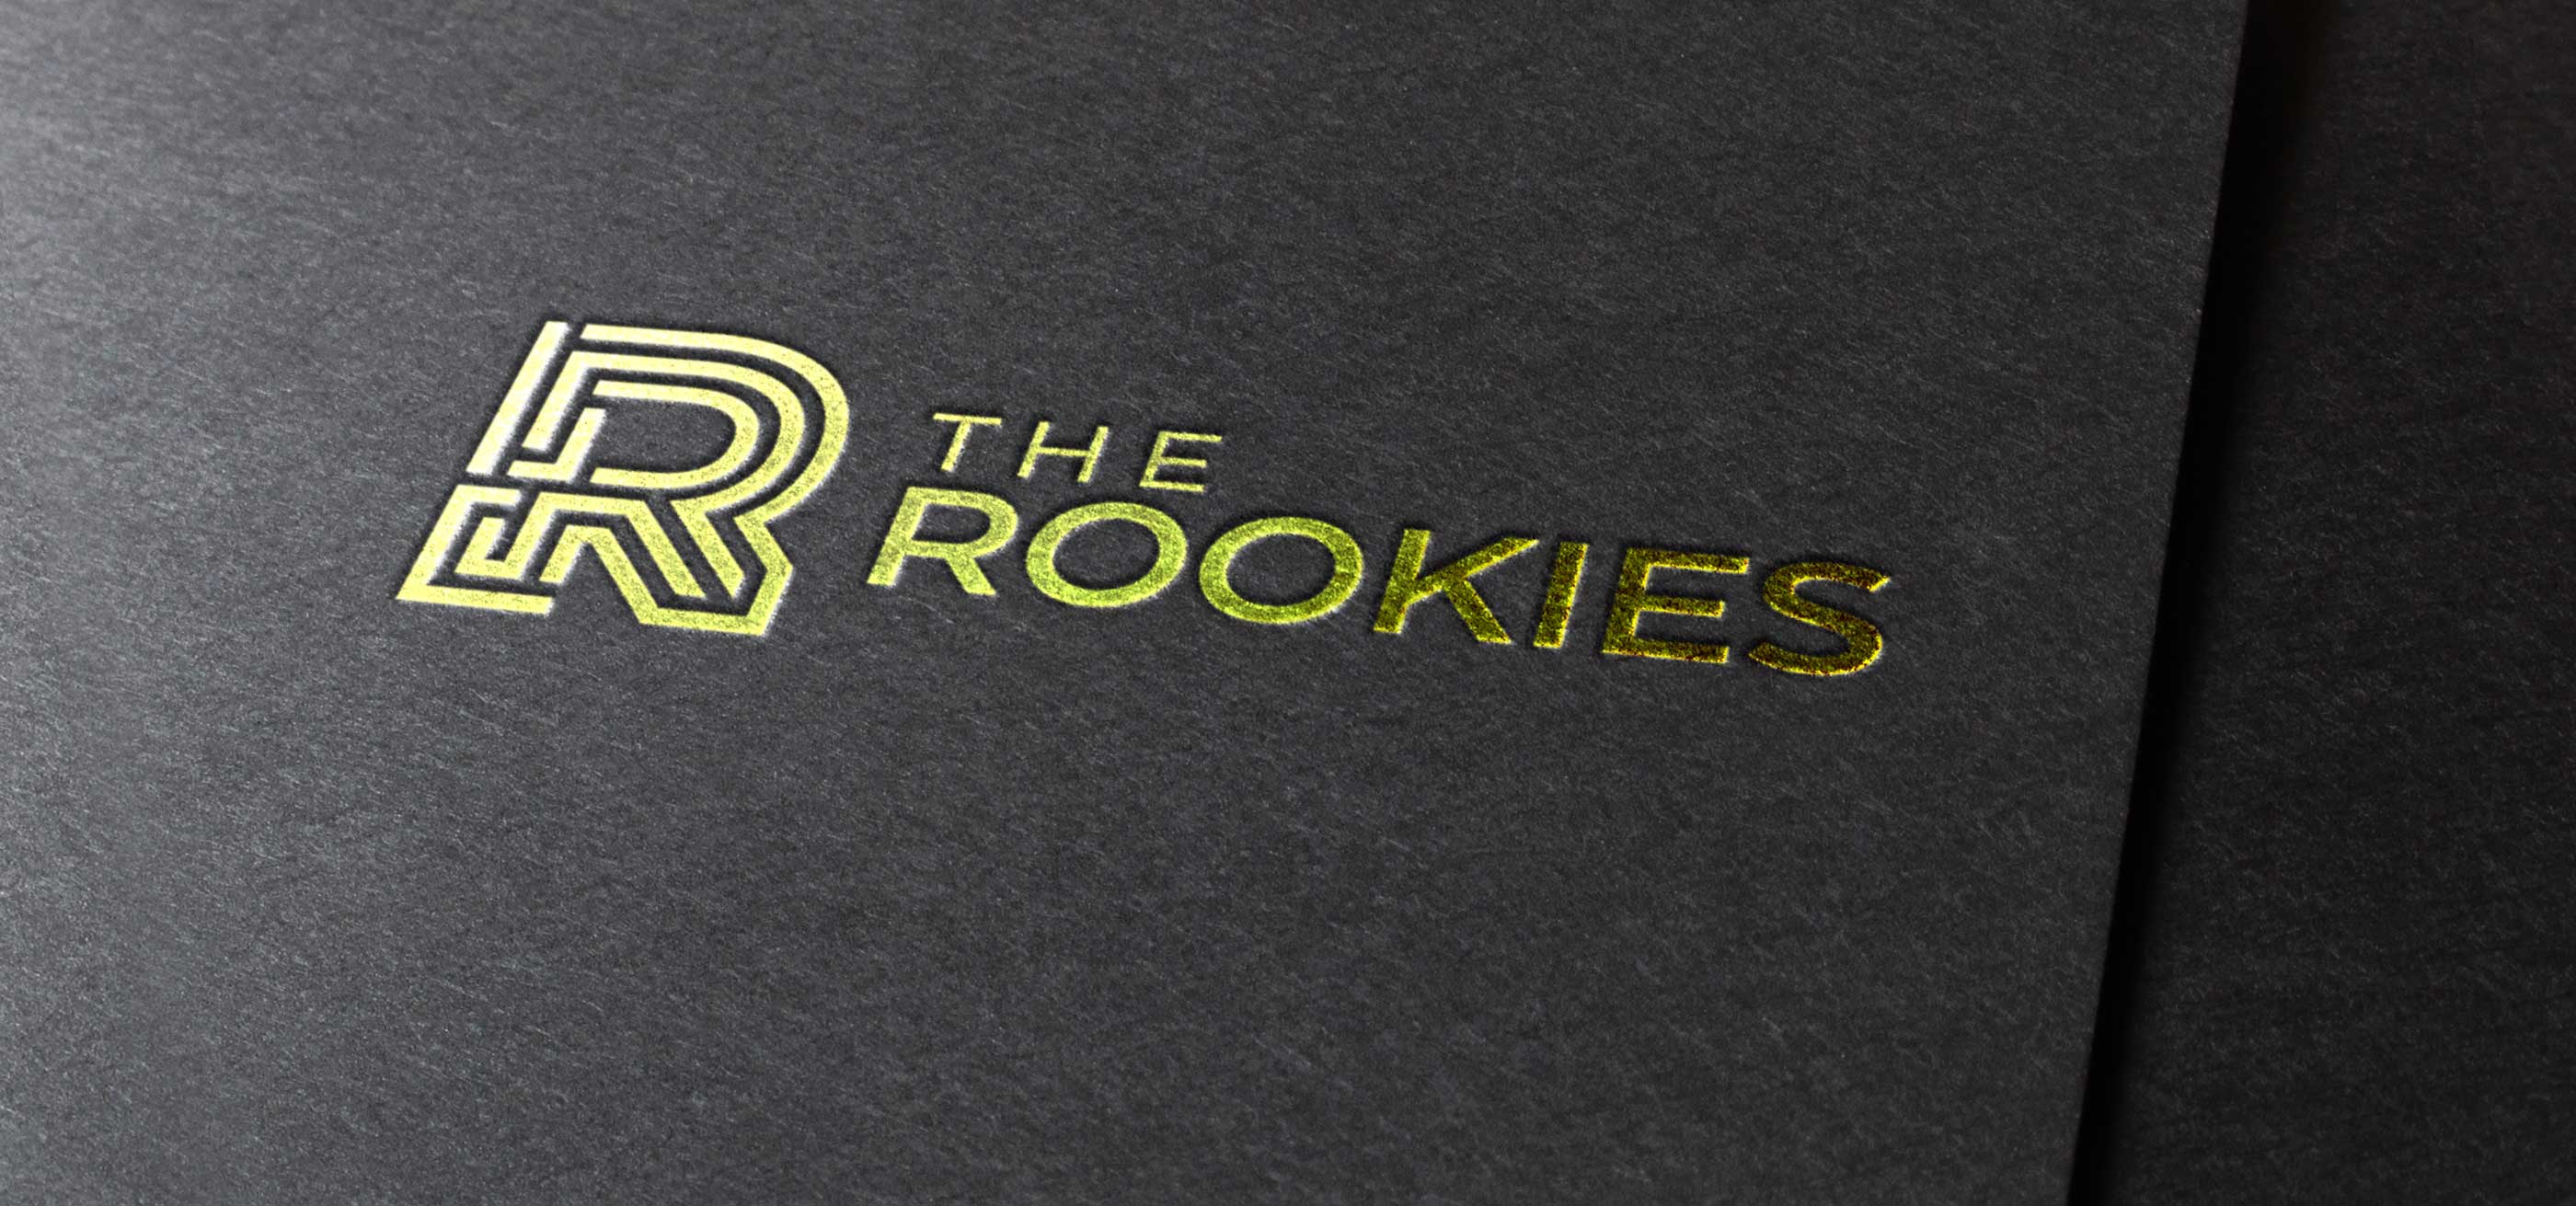 Golden rookies logo foil stamped on black parchment